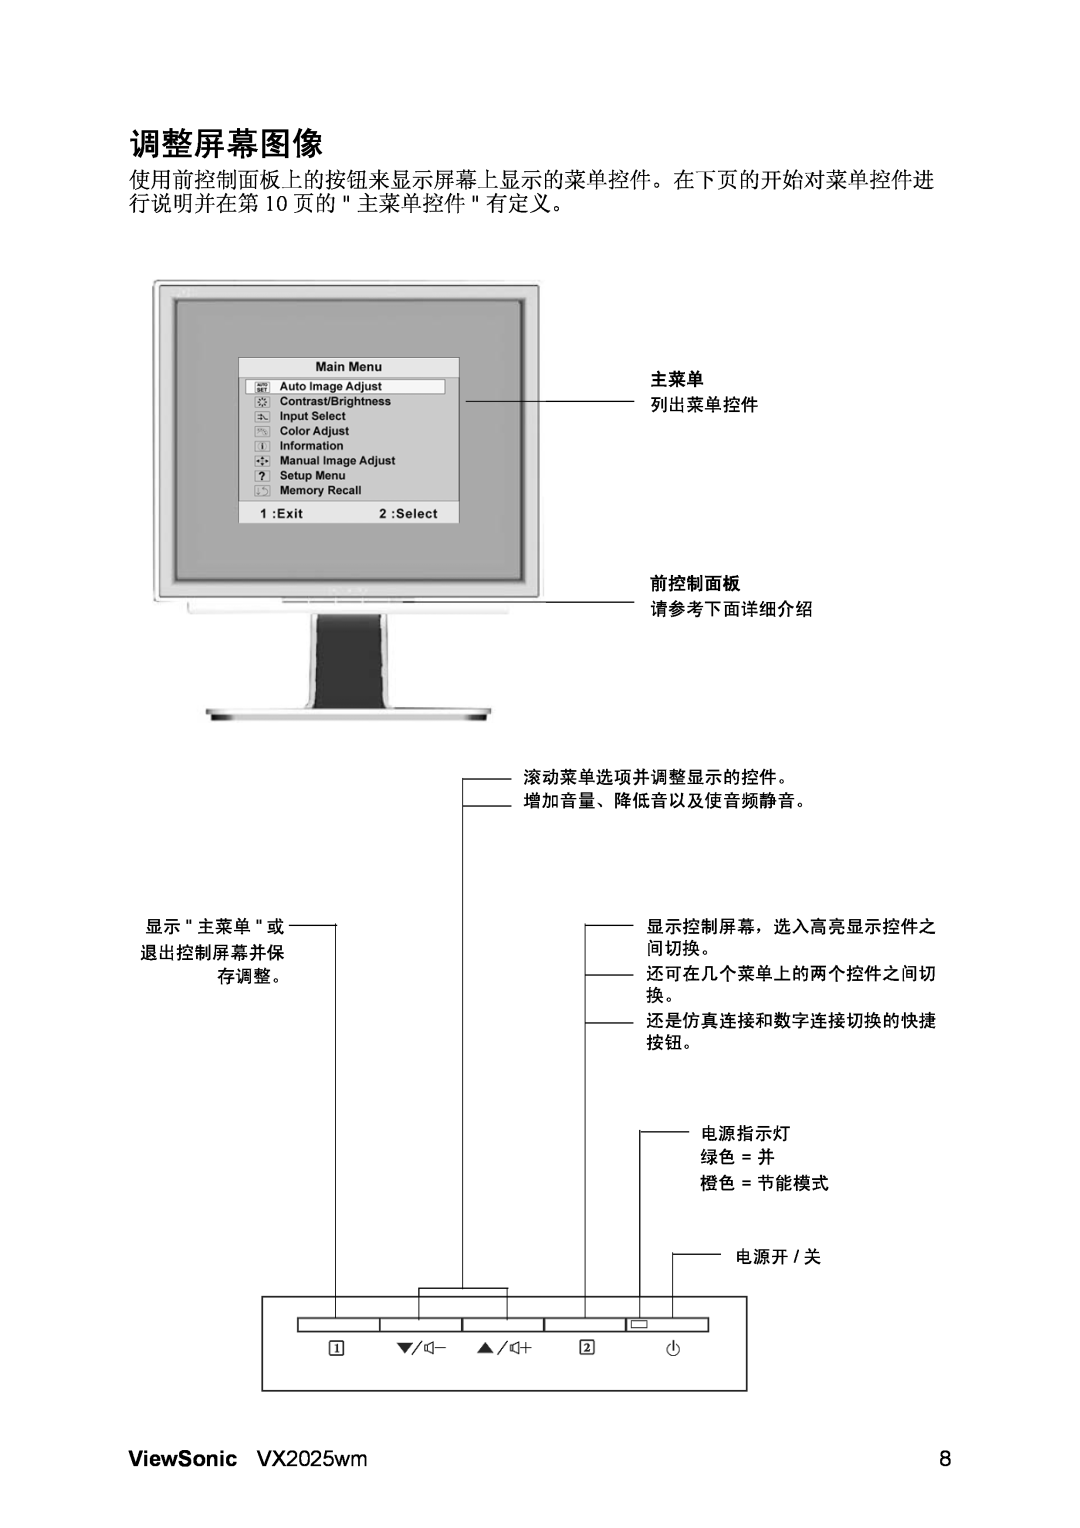 ViewSonic VS10859 manual 调整屏幕图像, ViewSonic VX2025wm, 显示 主菜单 或 退出控制屏幕并保 存调整。, 列出菜单控件, 前控制面板, 电源开 / 关 